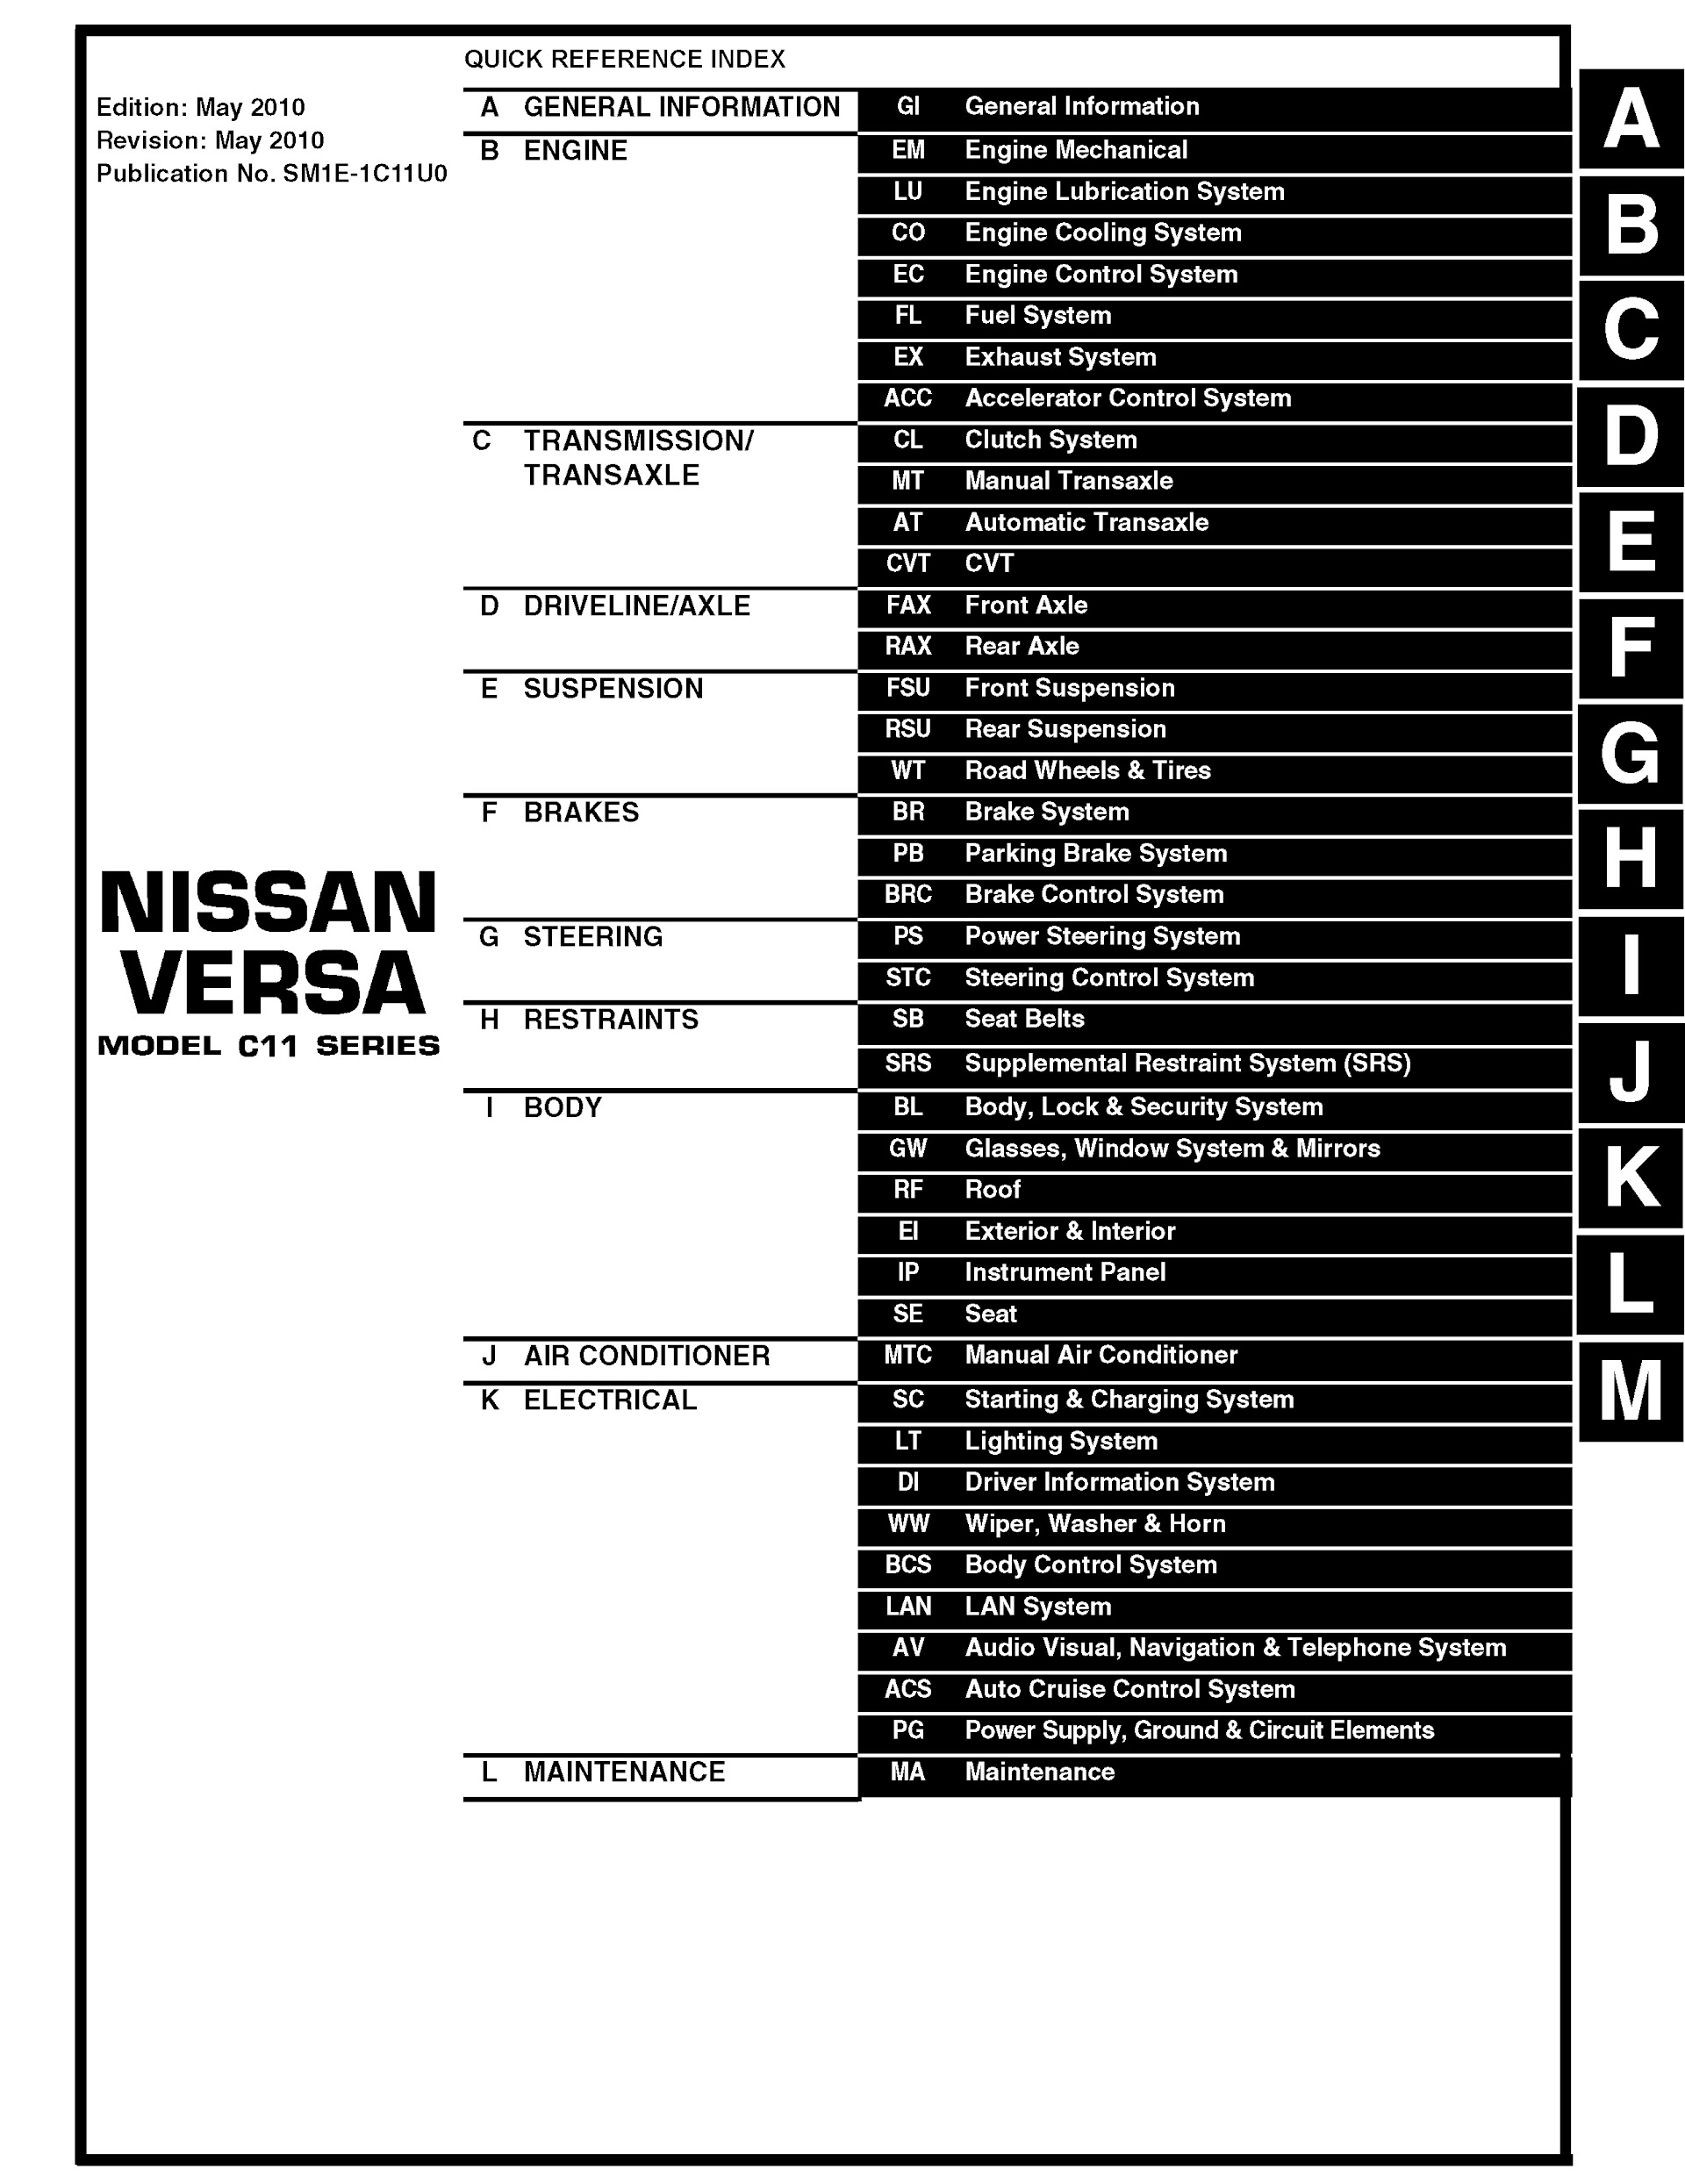 Contents of the 2011 Nissan Versa Repair Manual.